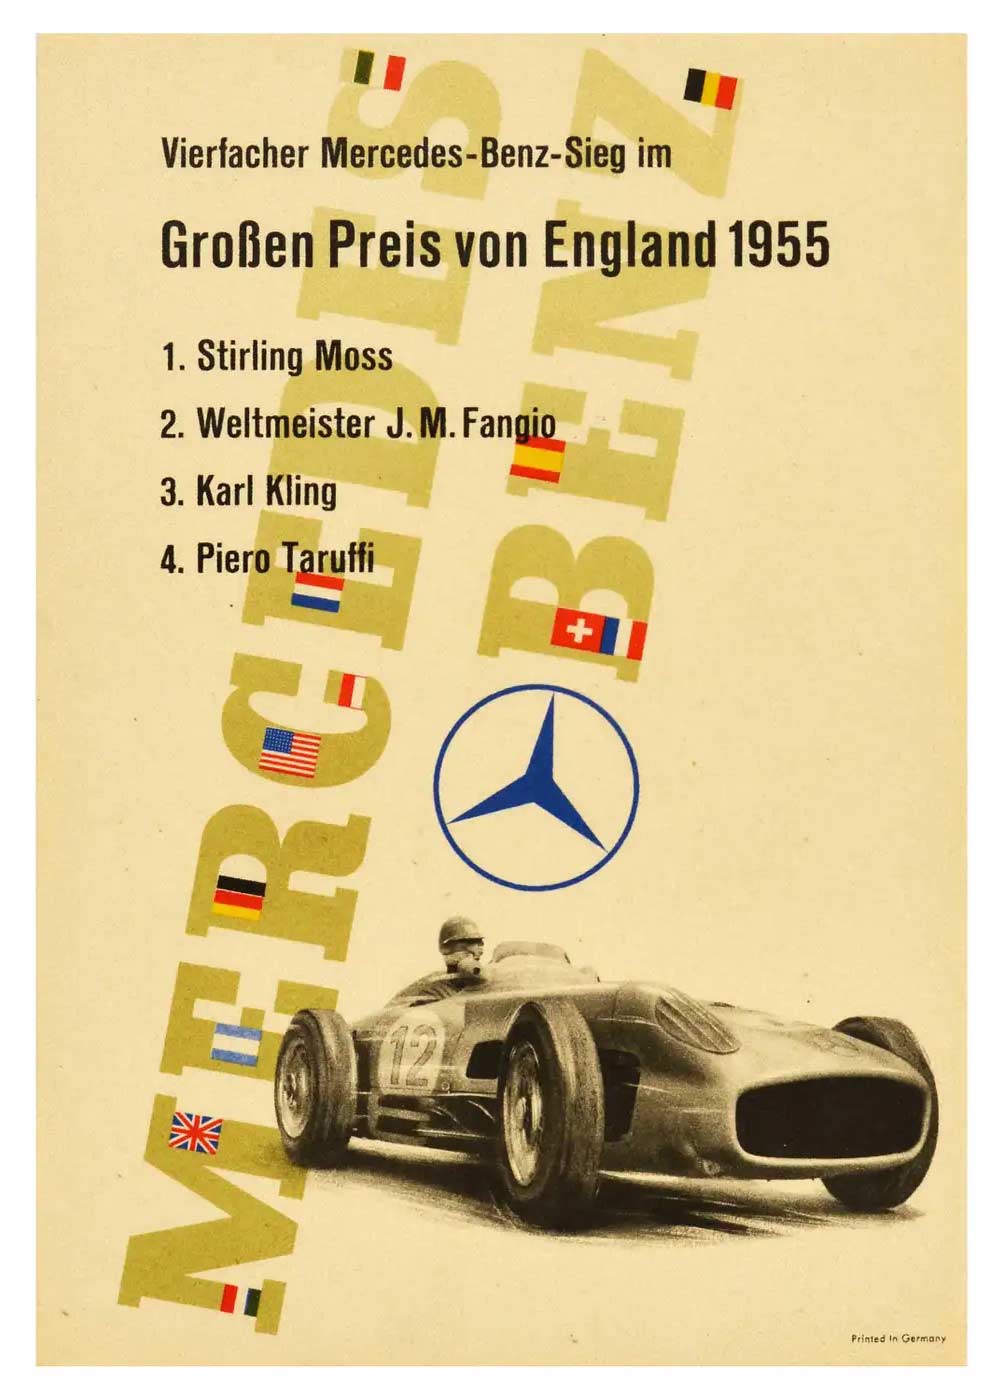 Mercedes Benz racing poster, German text, race car, Mercedes Benz logo, original poster, authentic poster, mid century modern design